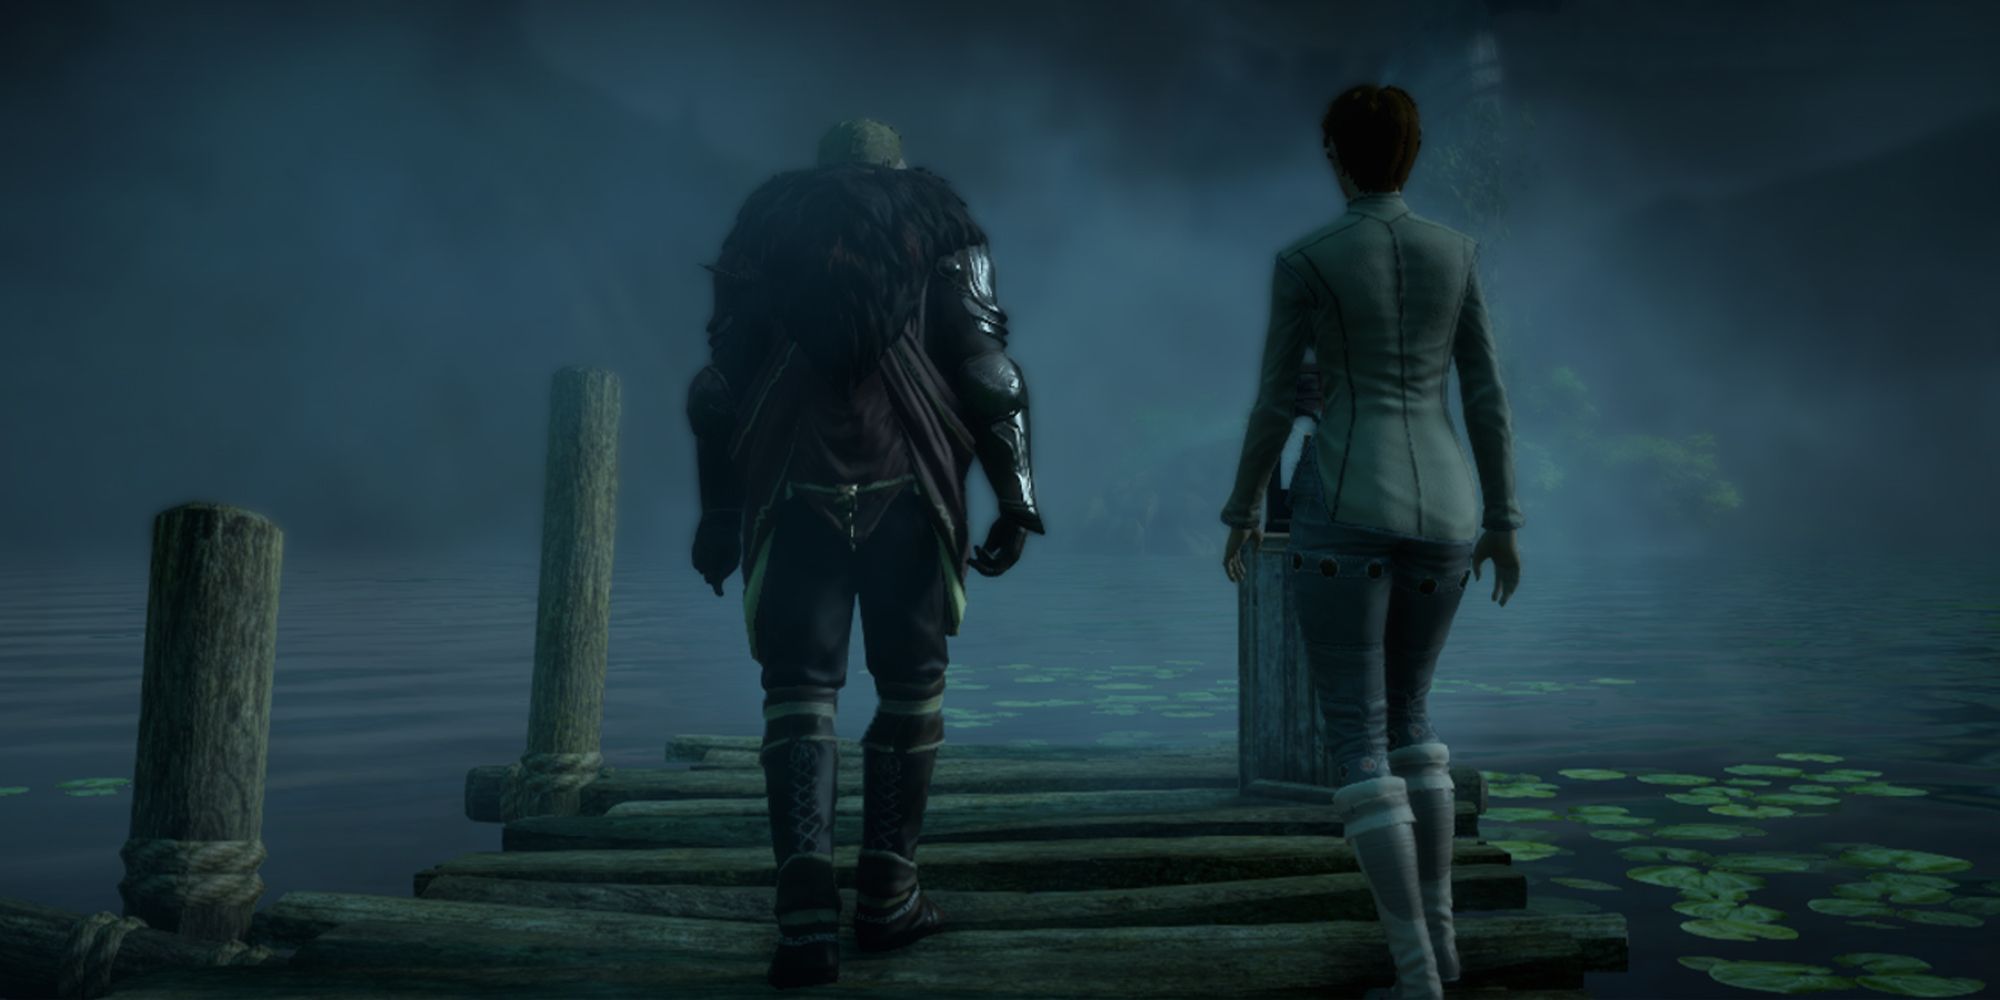 Dragon Age Inquisition - Cullen and the Inquisitor at the lake, romance cutscene